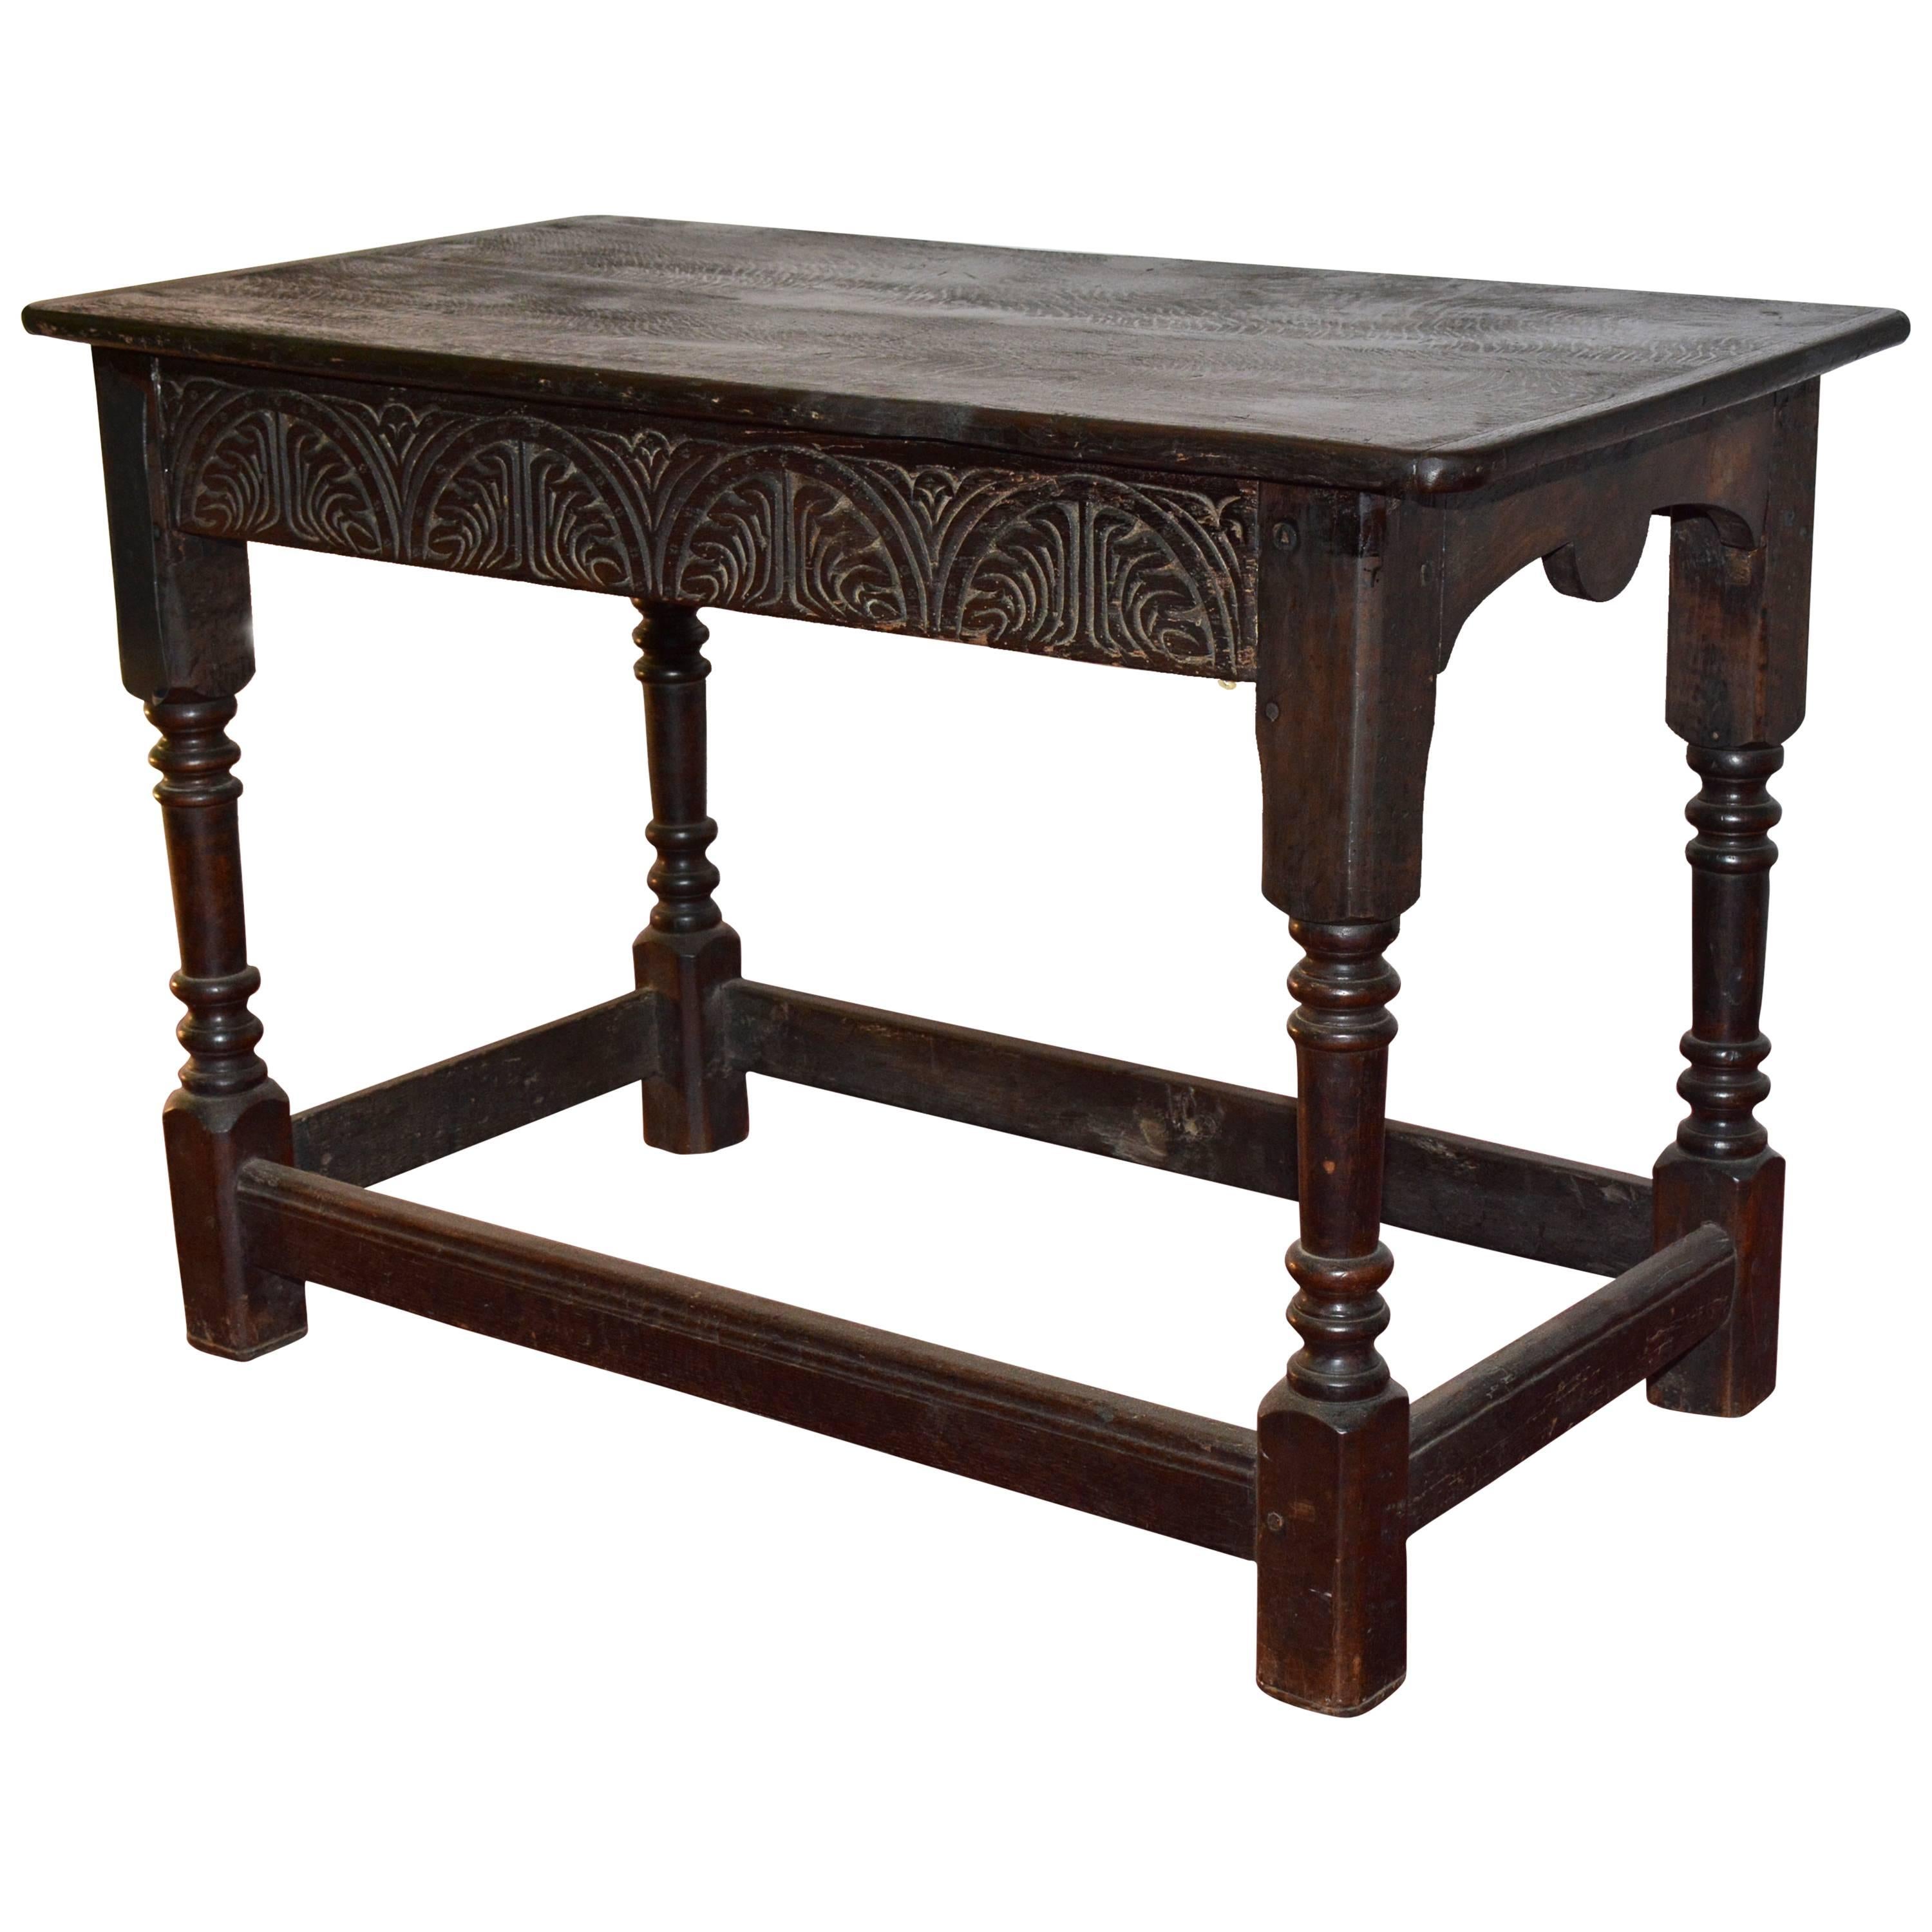 Jacobean-Revival Stained Oak Center Table